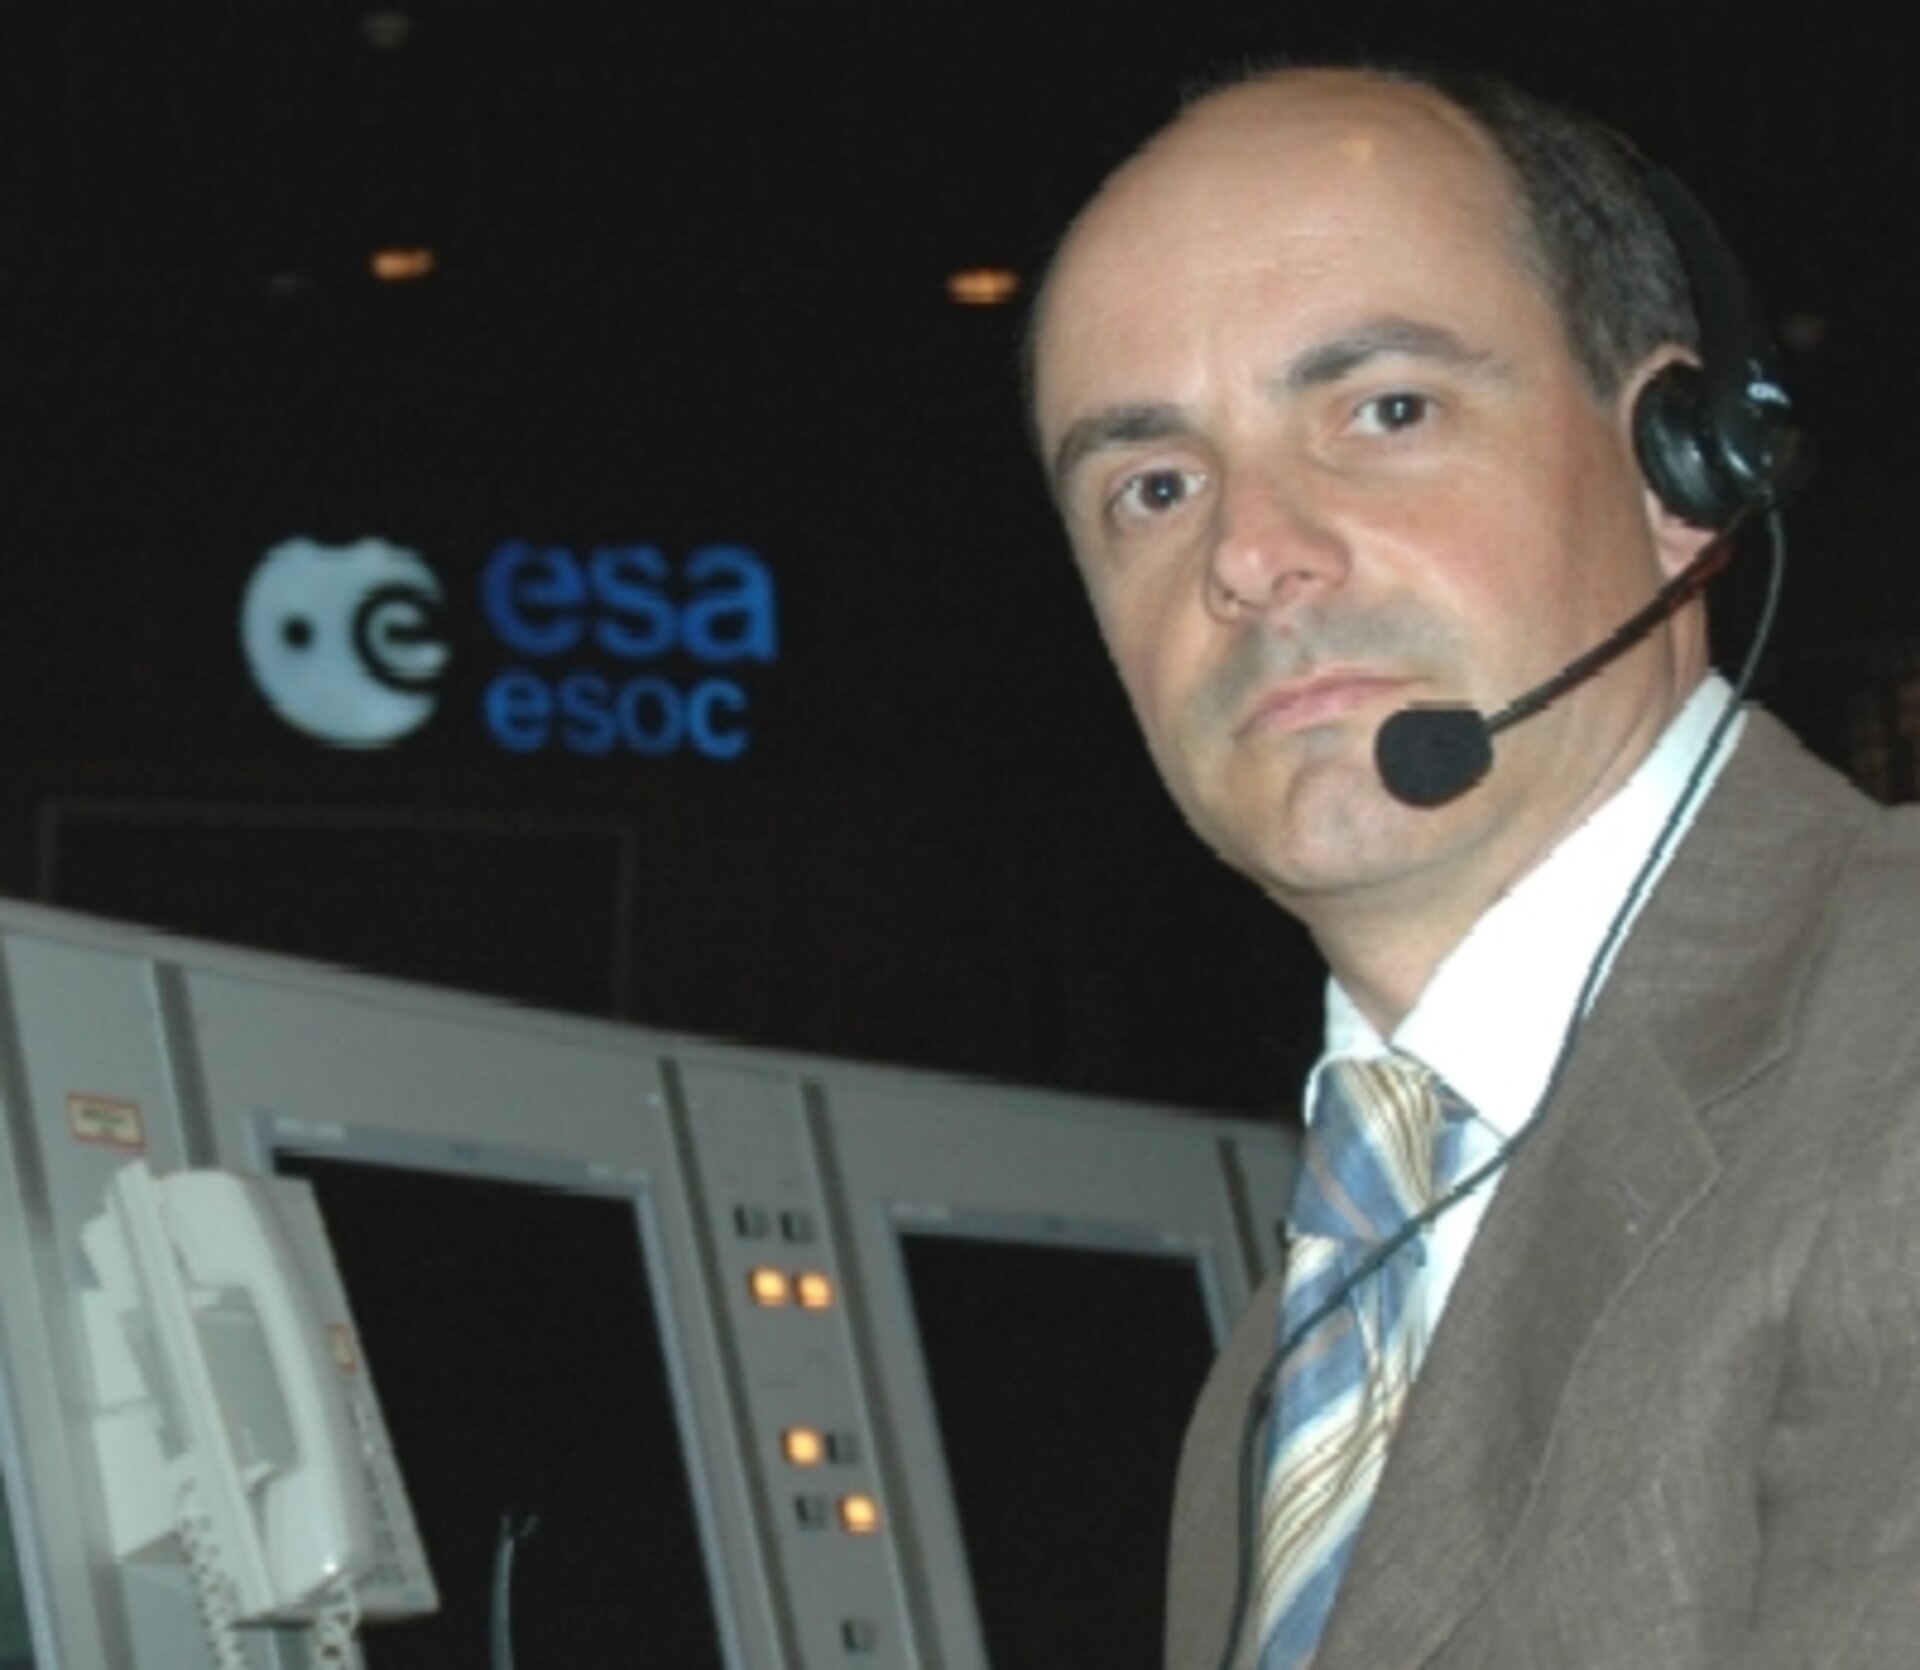 Alessandro Donati, head of ESOC's Mission Control Technologies Unit